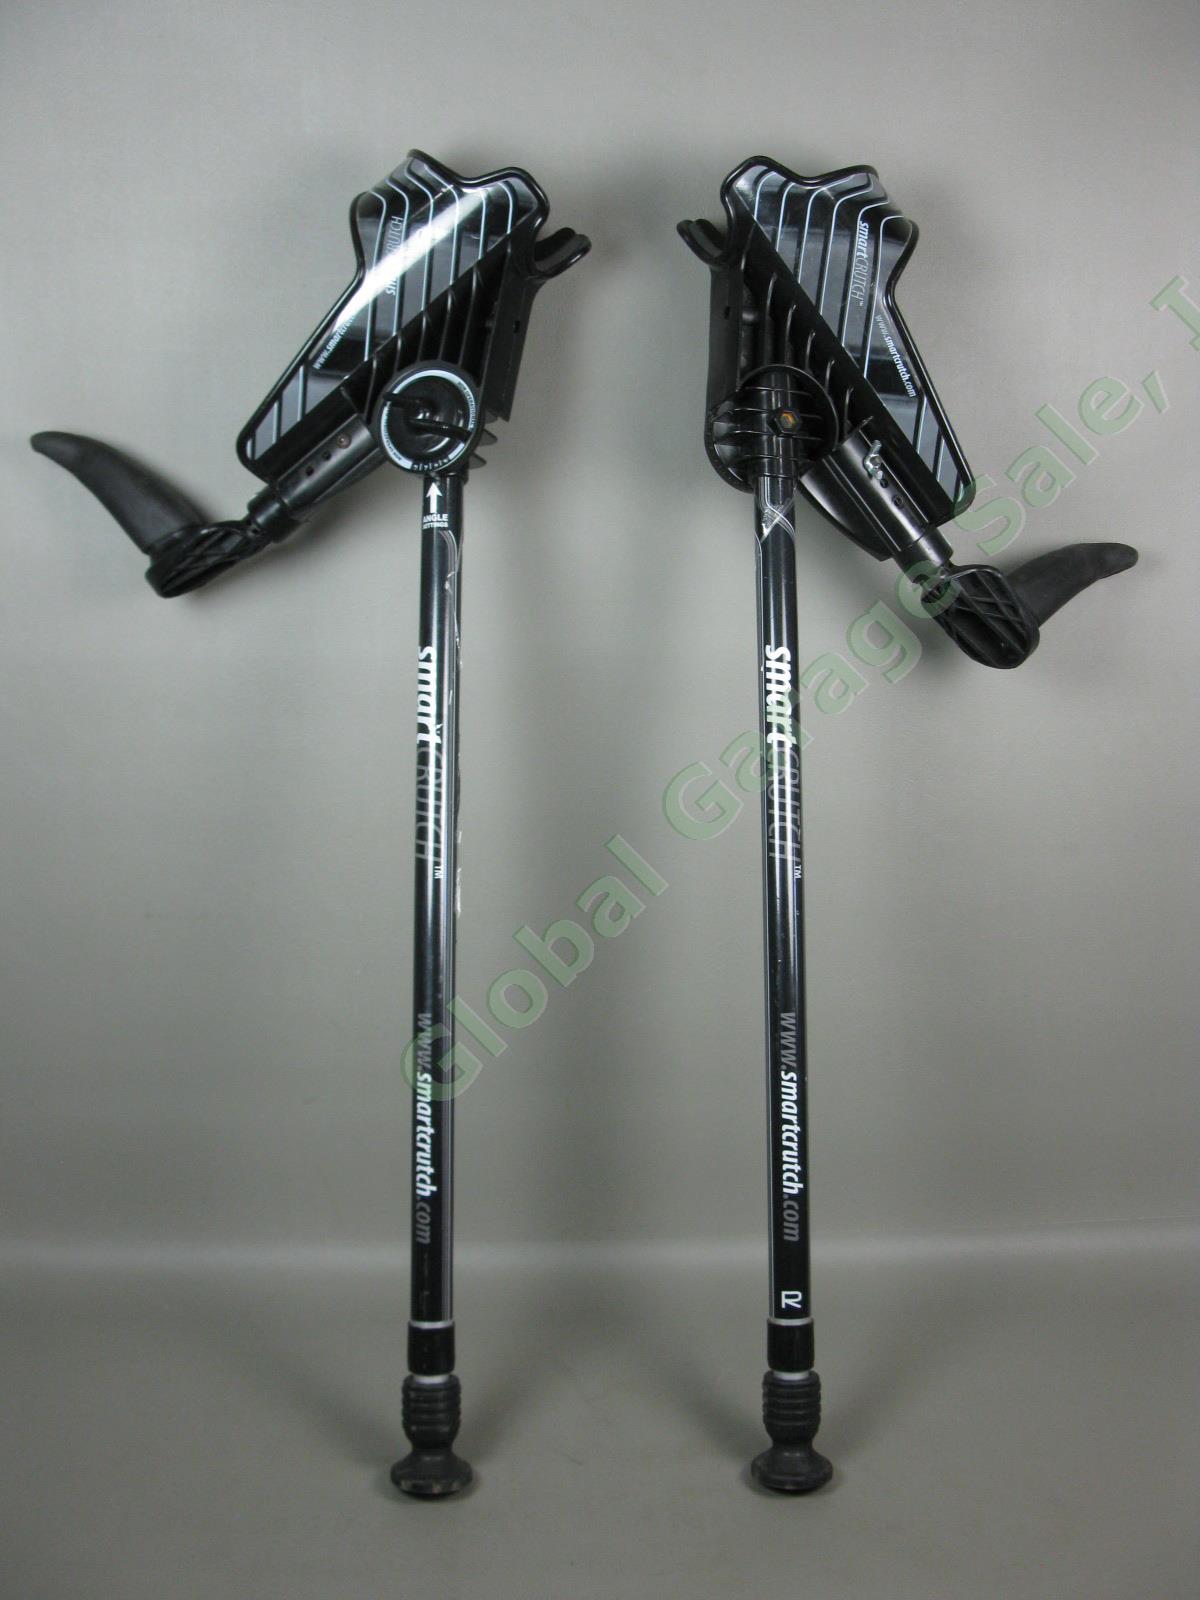 2 Black SmartCrutch Adjustable Telescopic Forearm Walking Crutches Pair Set Lot